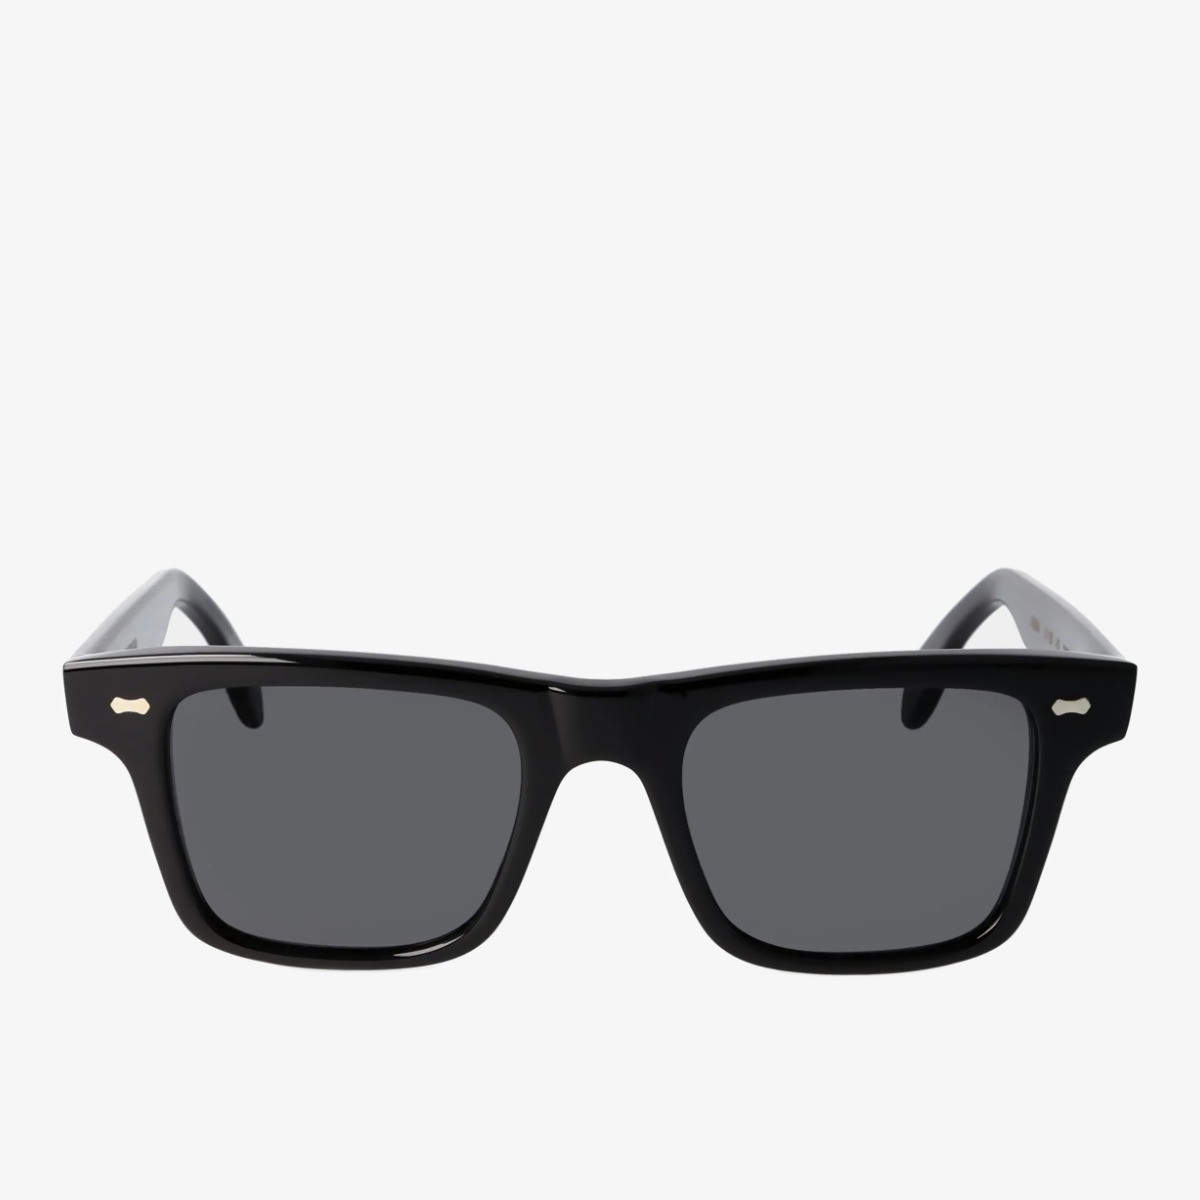 TBD Eyewear Denim black frame grey lenses sunglasses